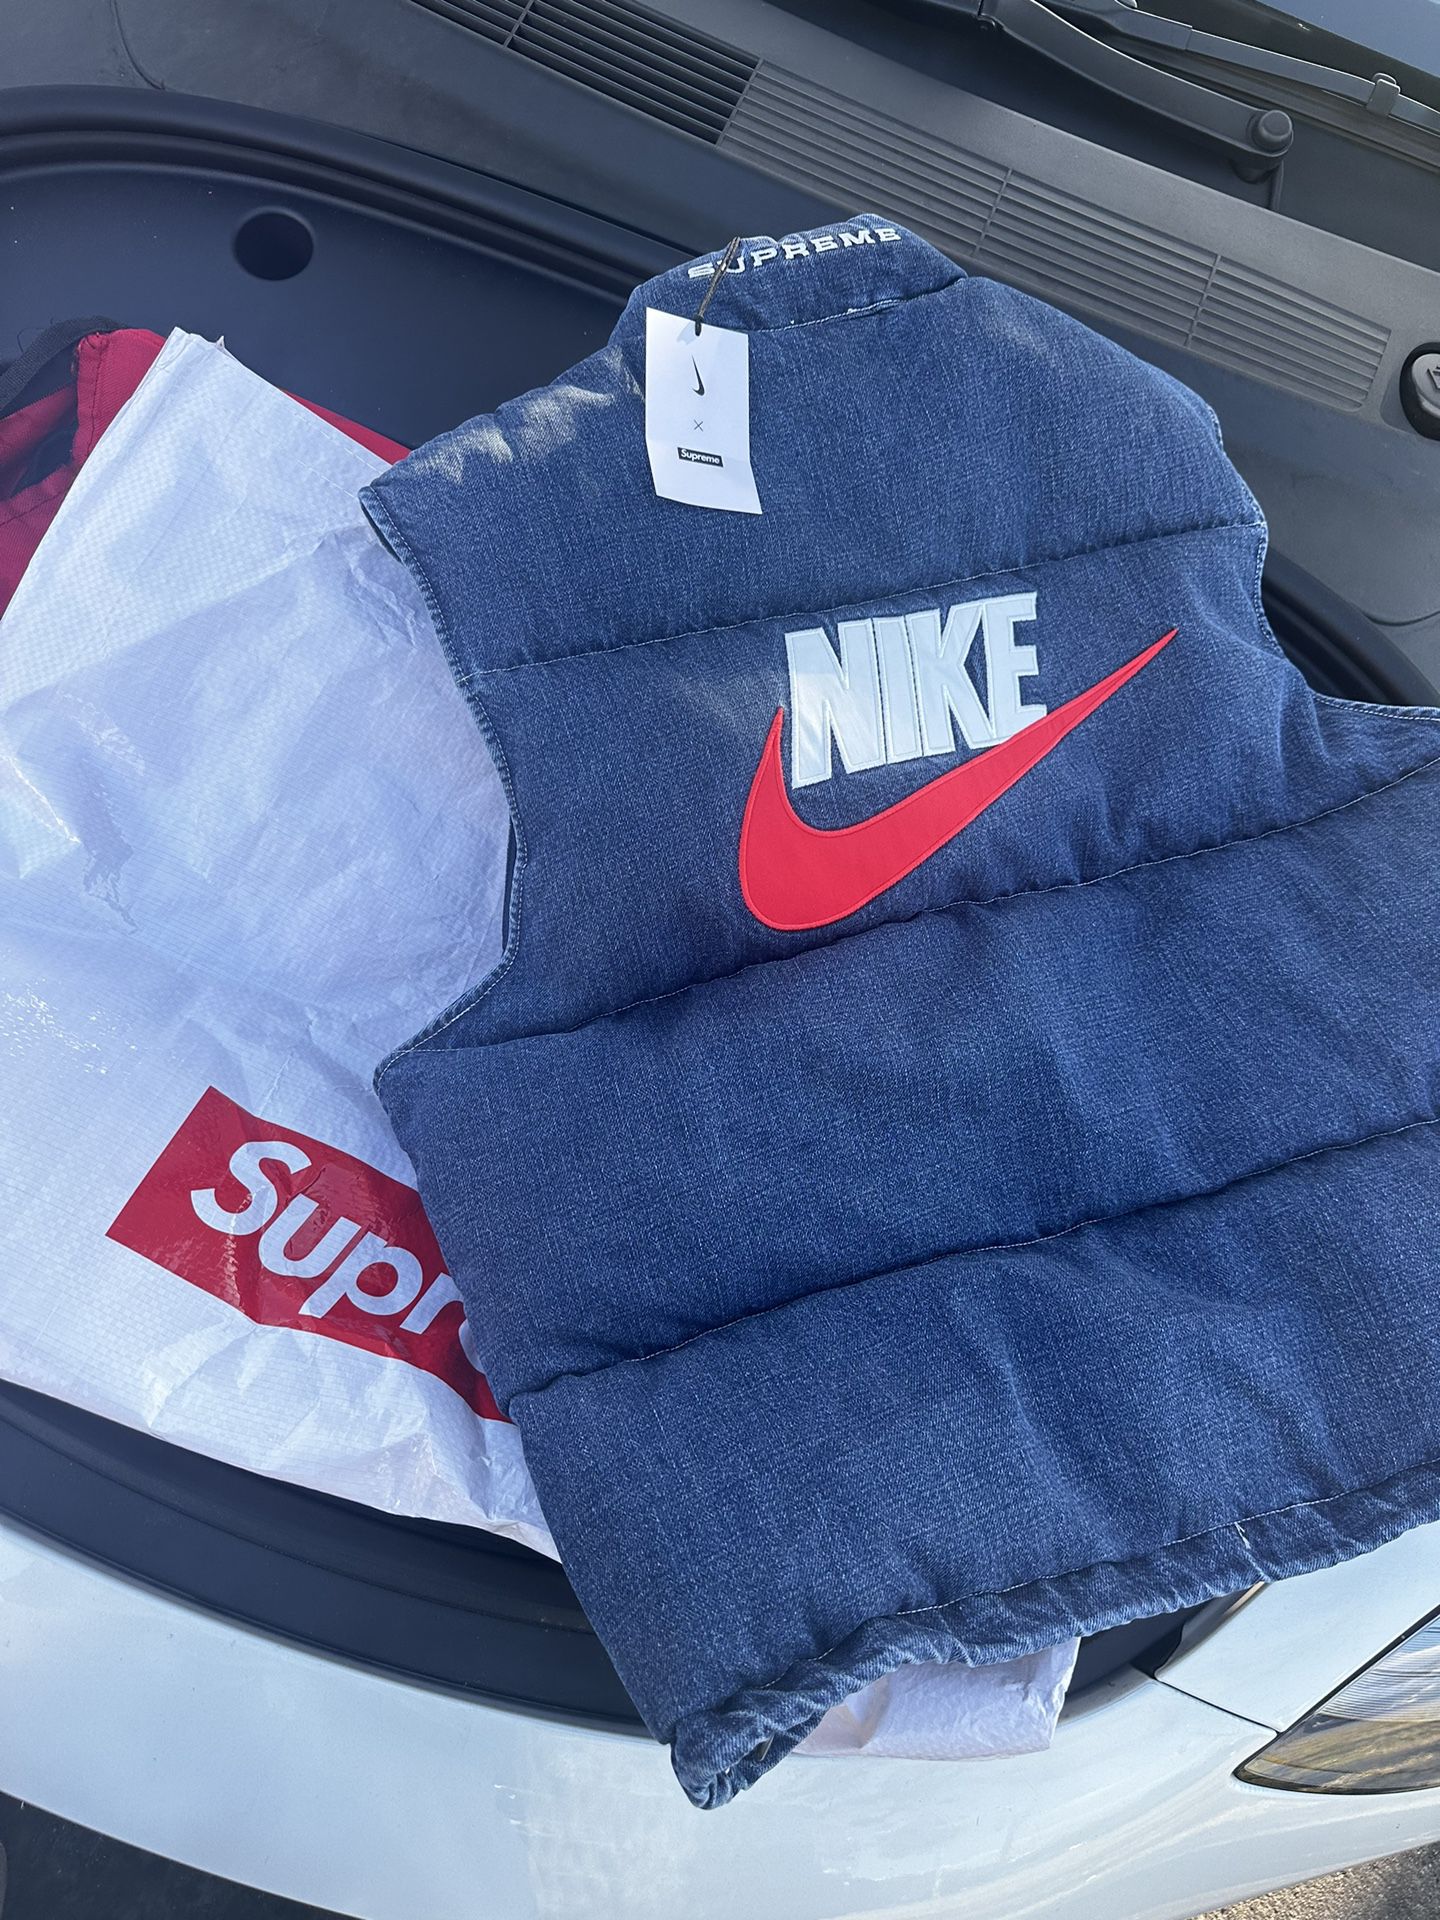 Nike Supreme Puffer Vest jean Size Medium Fits Like Large 